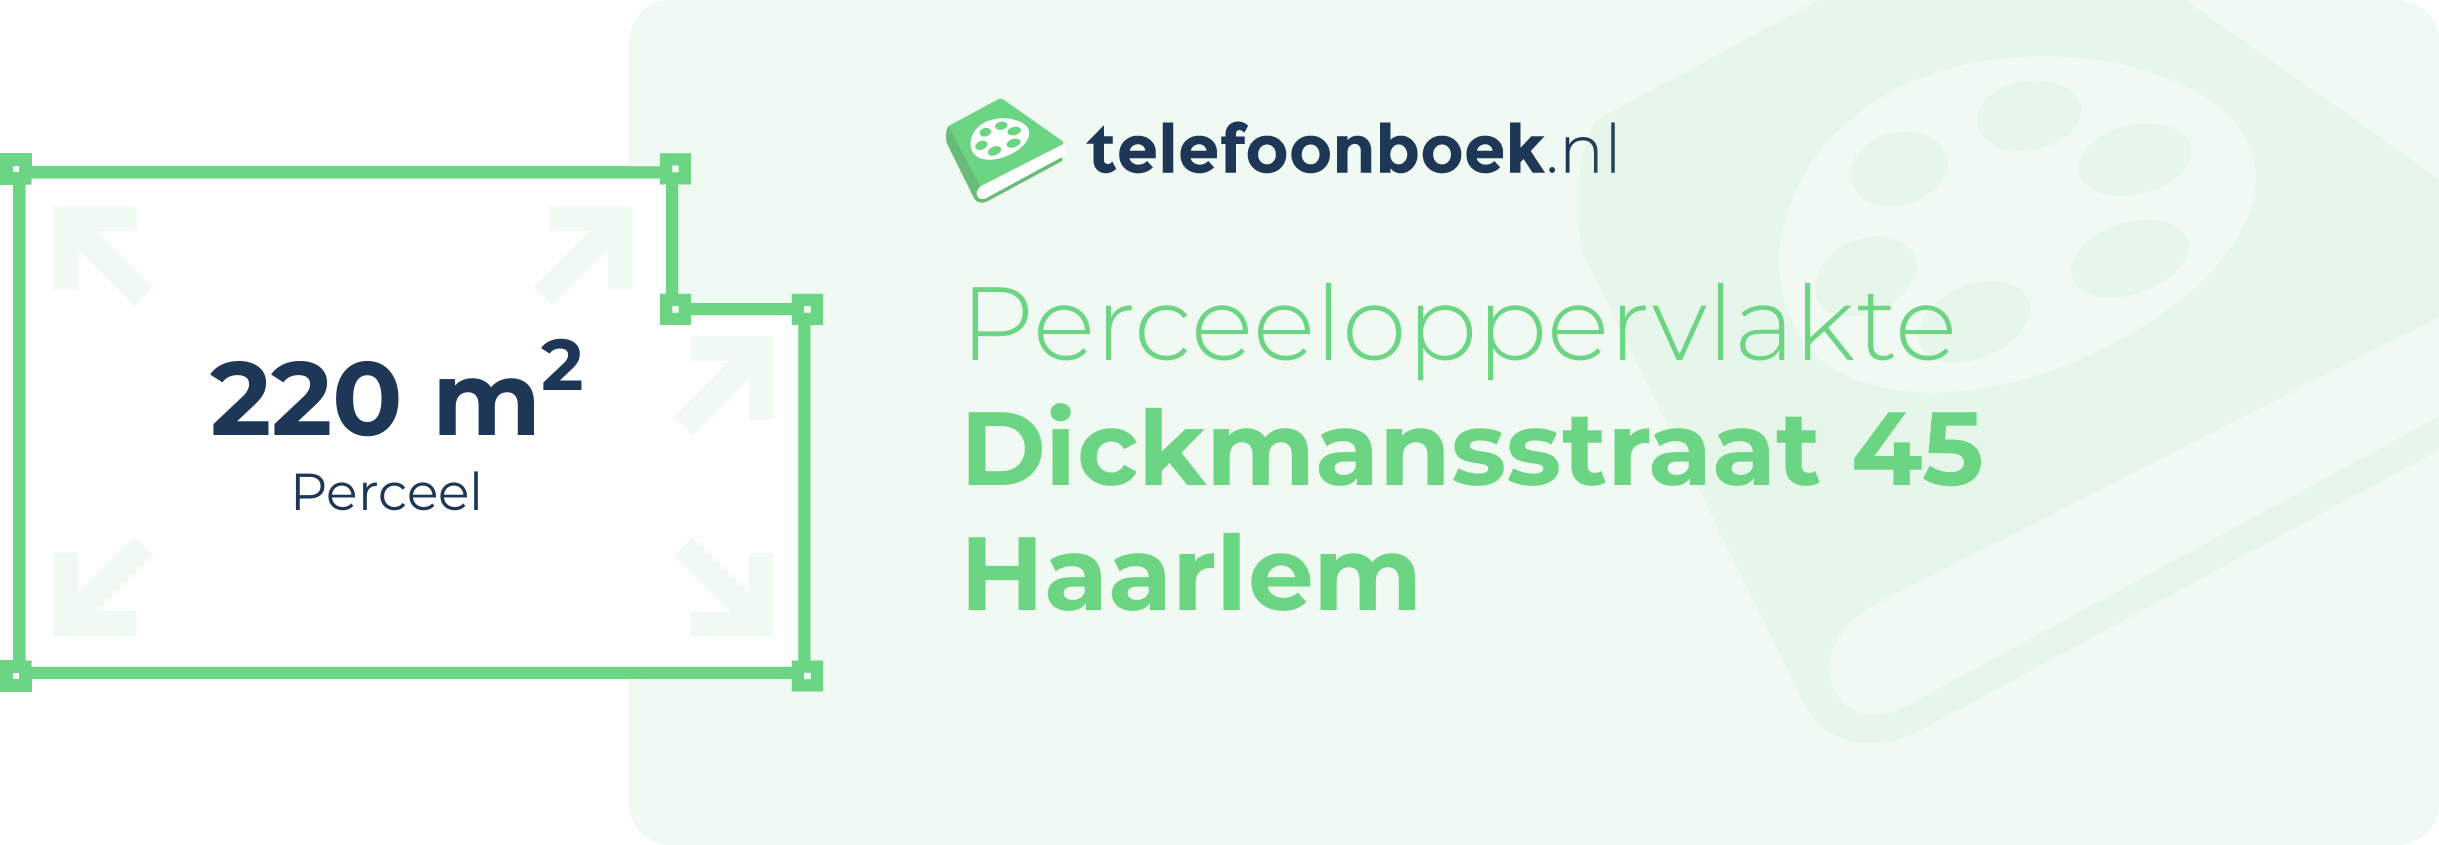 Perceeloppervlakte Dickmansstraat 45 Haarlem